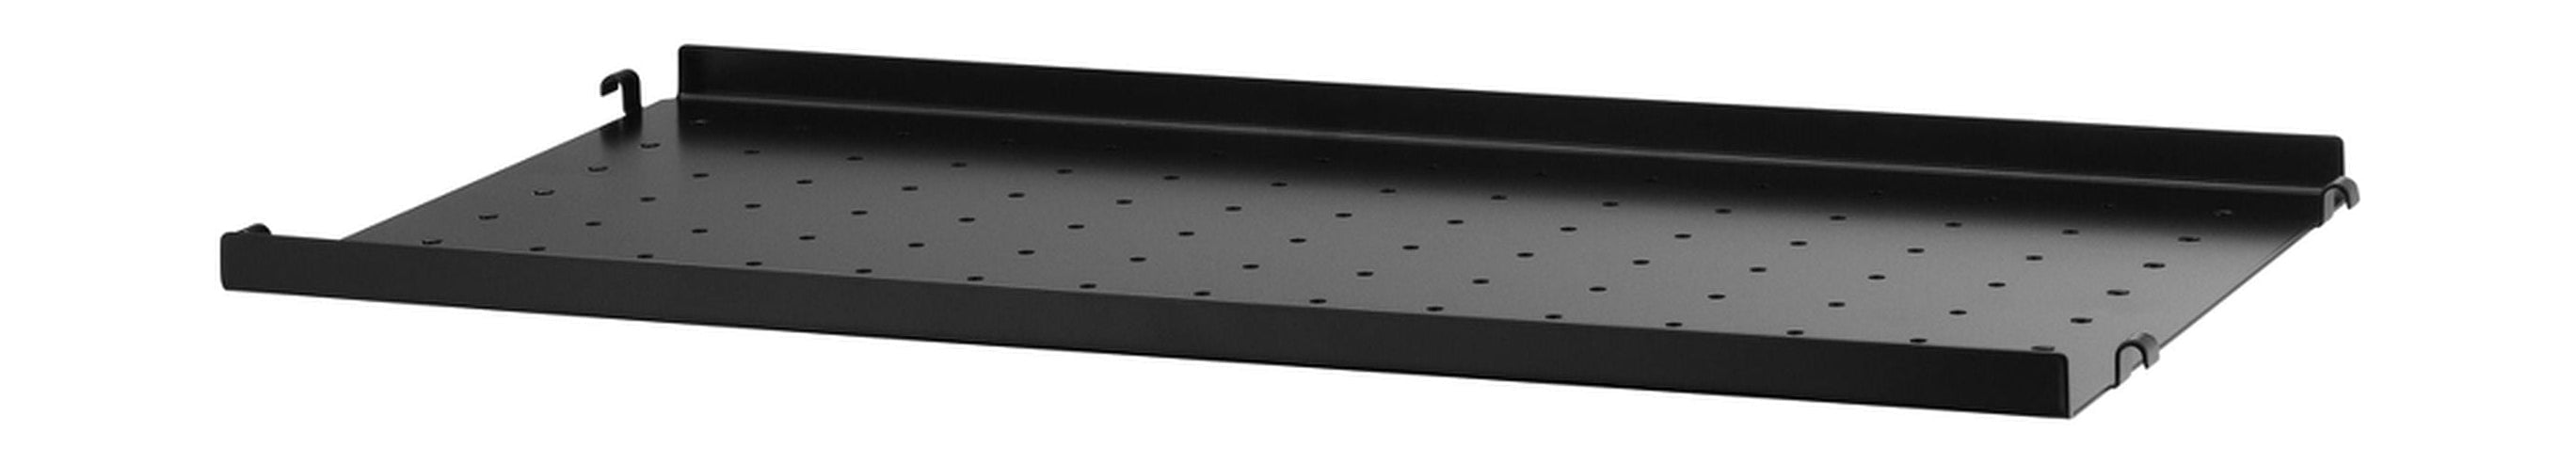 Strengmøbler Strengsystem Metalhylde med lav kant 30x58 cm, sort